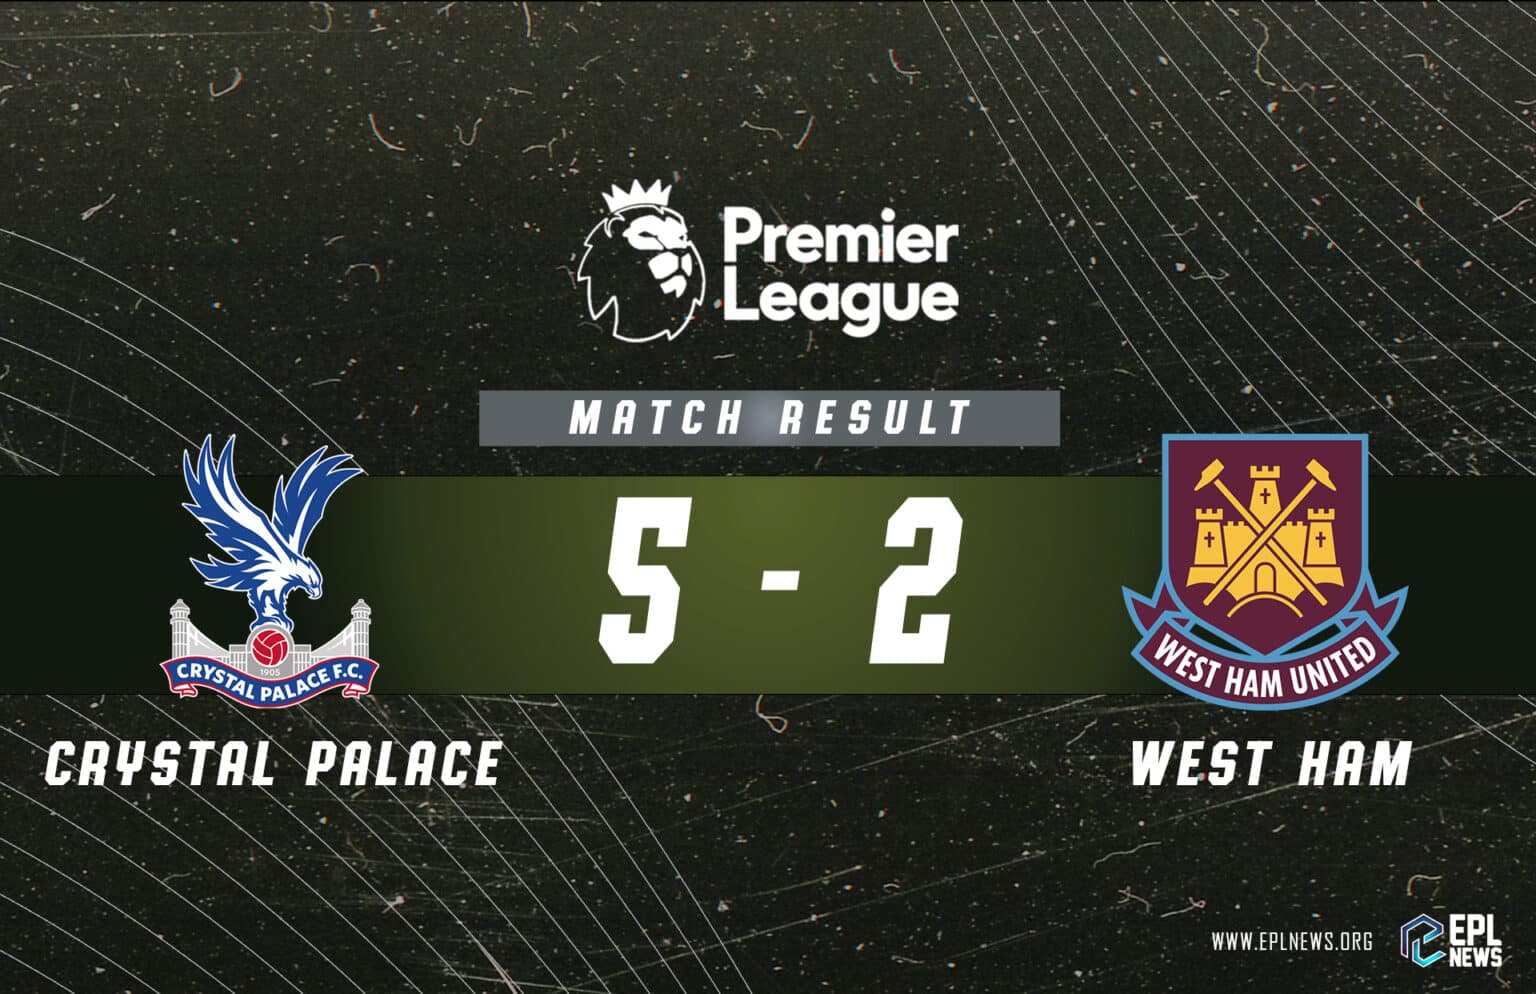 Laporan Crystal Palace lwn West Ham